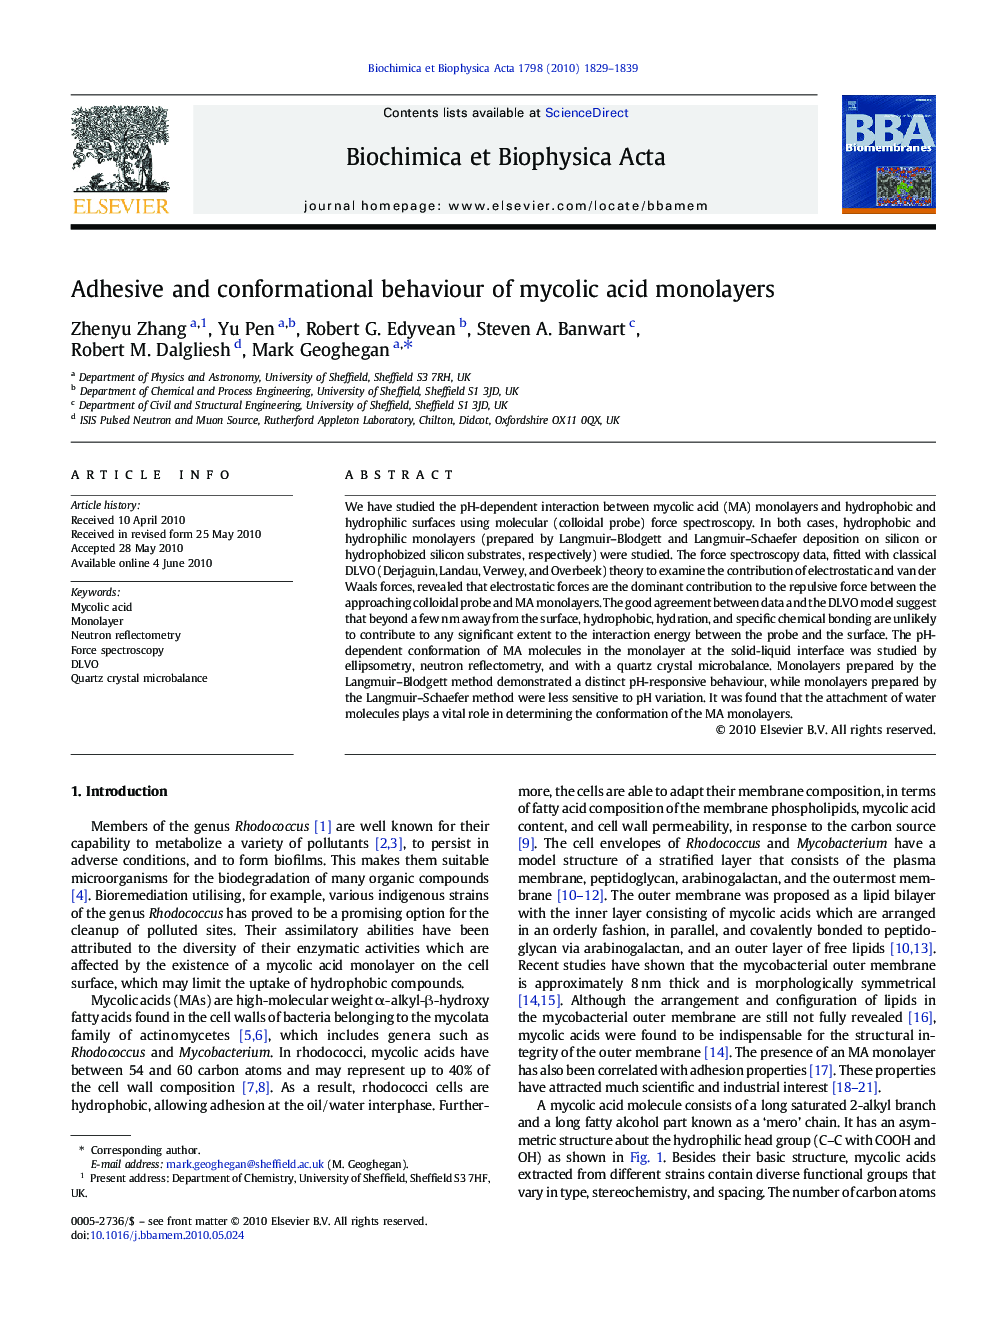 Adhesive and conformational behaviour of mycolic acid monolayers